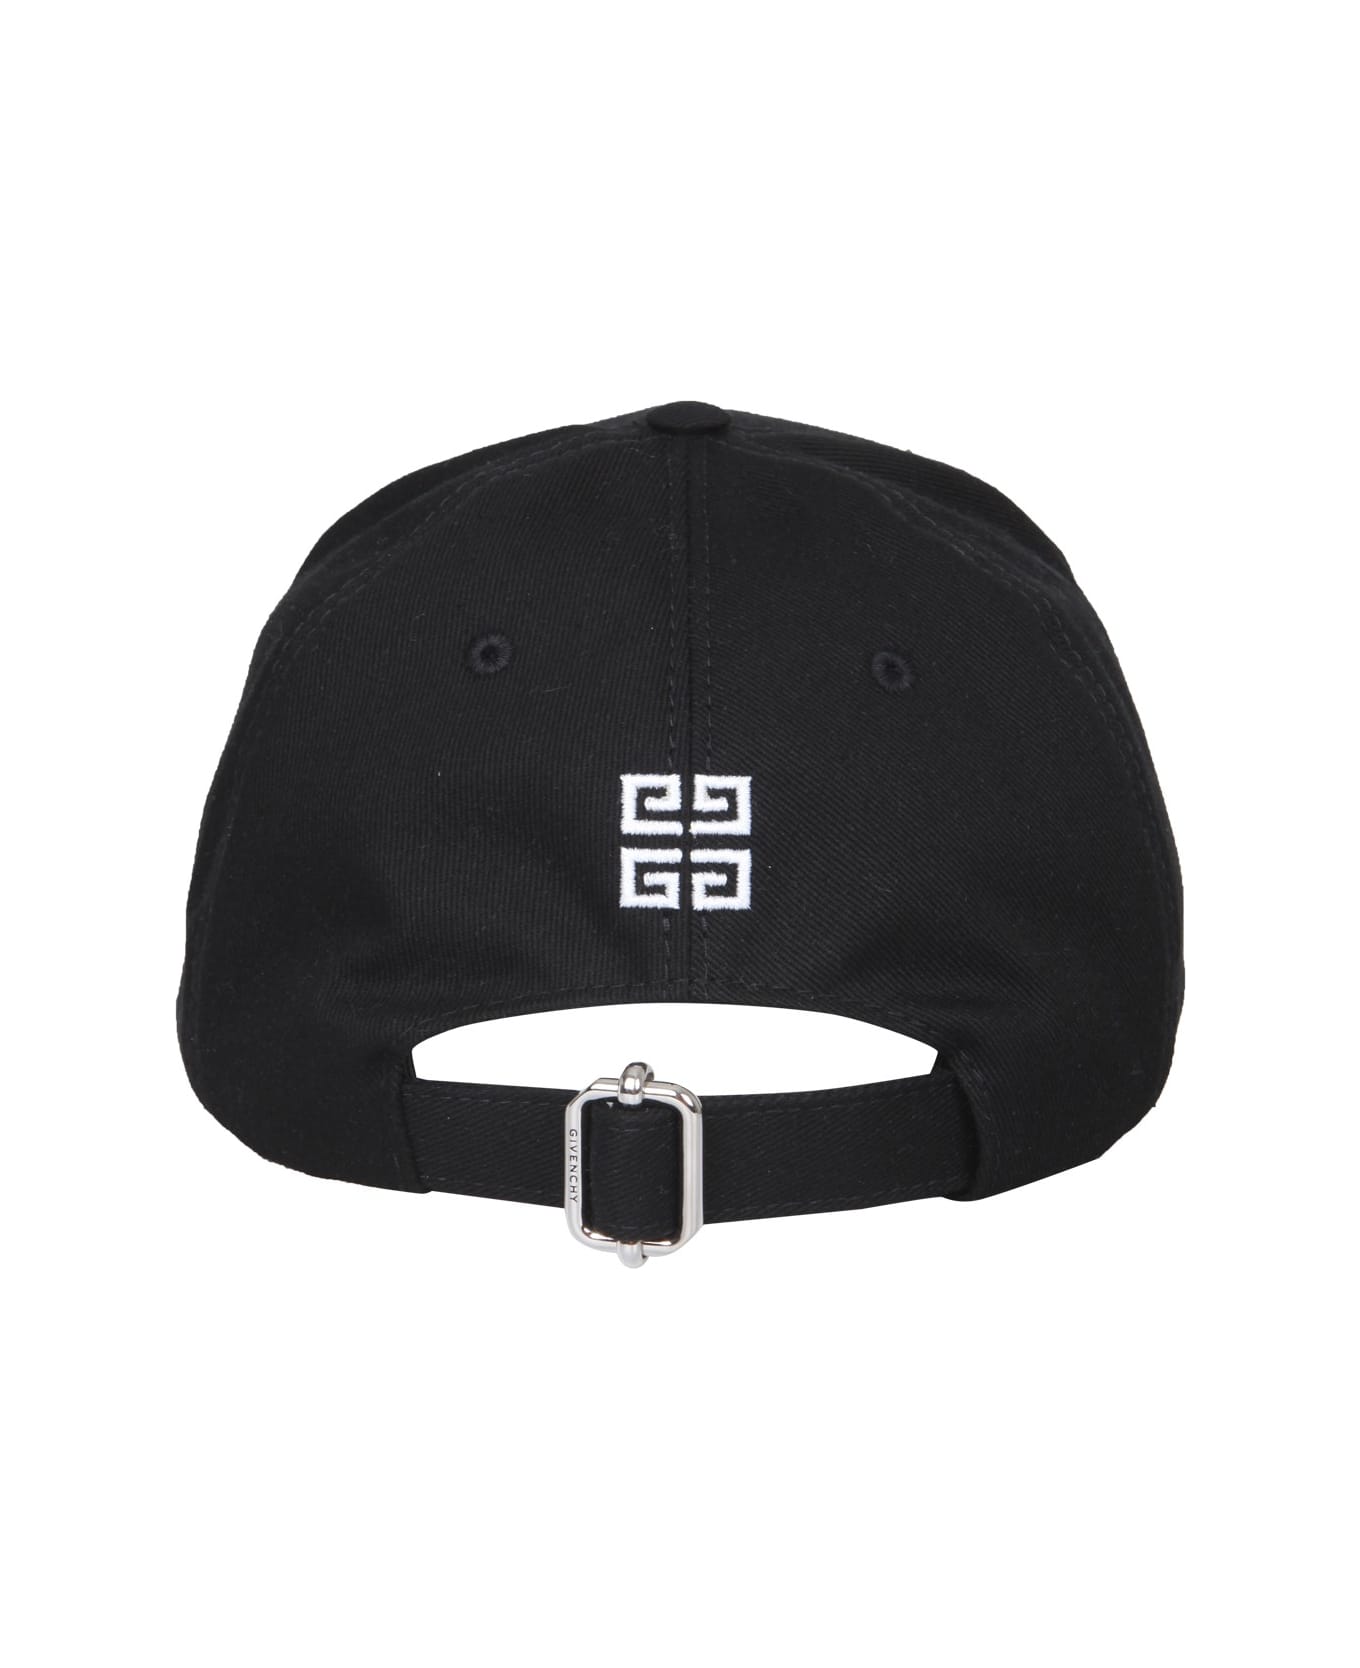 Givenchy 4g Hat - Black 帽子